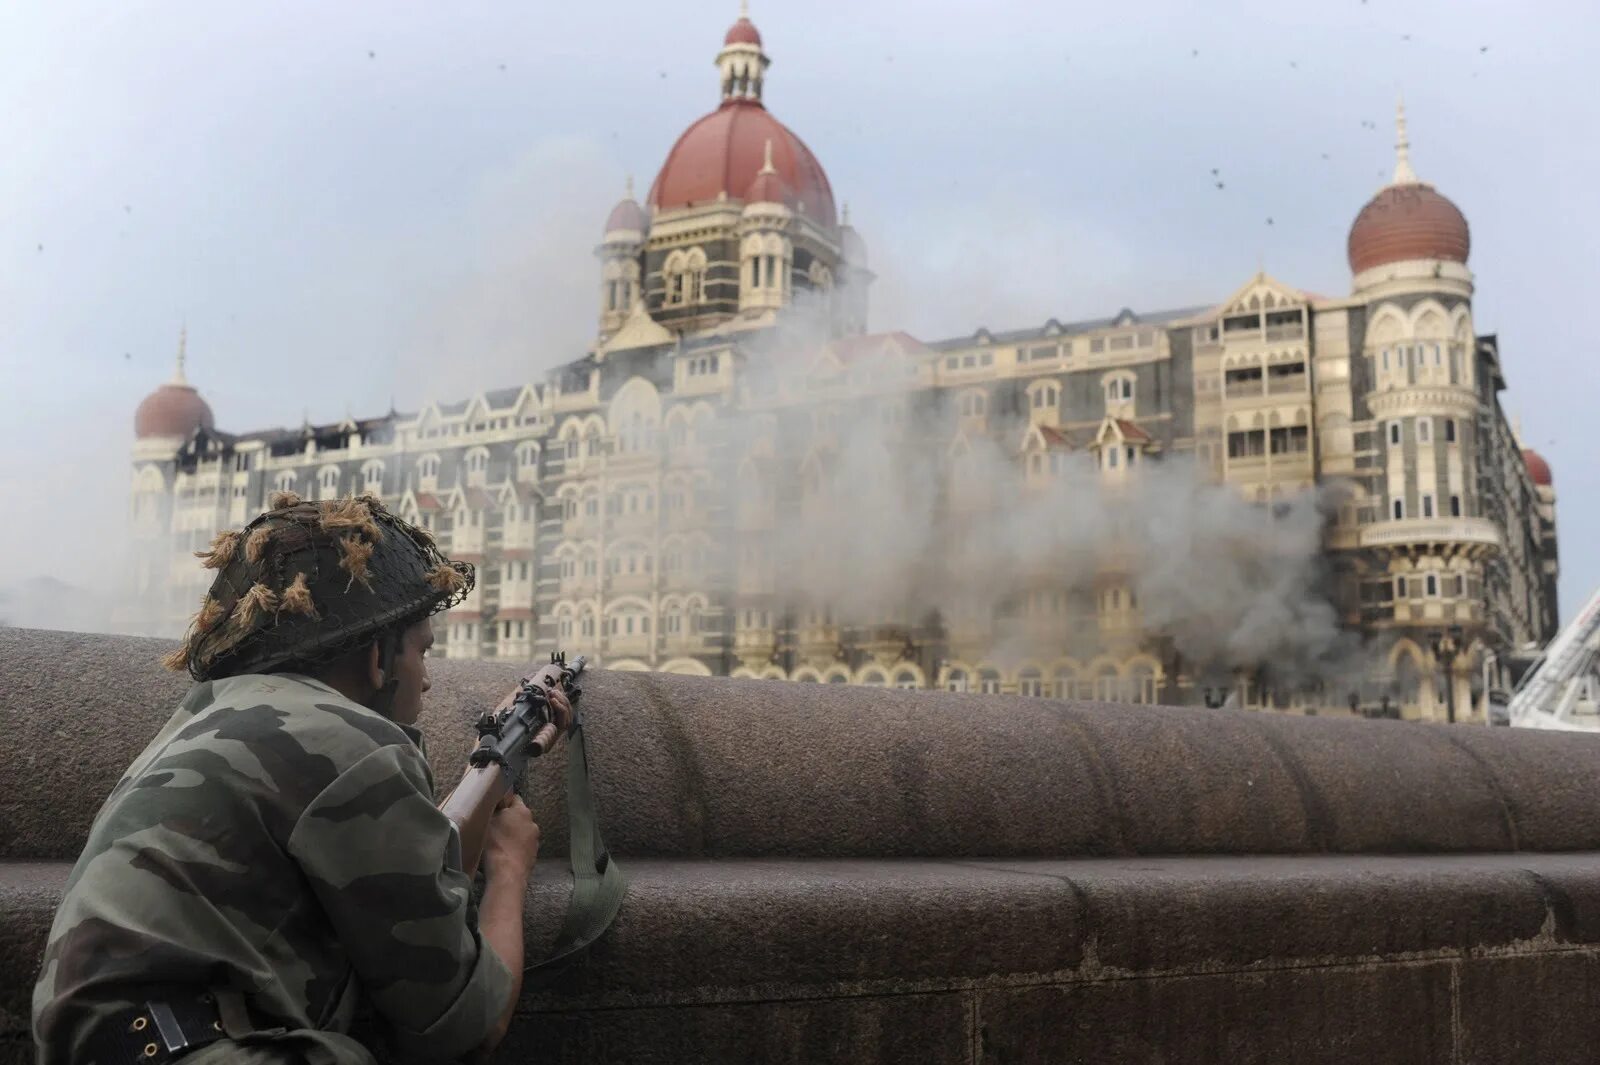 Отель тадж махал 2008. Индия 2008 теракт отель Мумбаи. Мумбаи 2008 Тадж Махал теракт. Отель Тадж Махал в Мумбаи теракт 2008. Атака Мумбаи 2008 террористы.